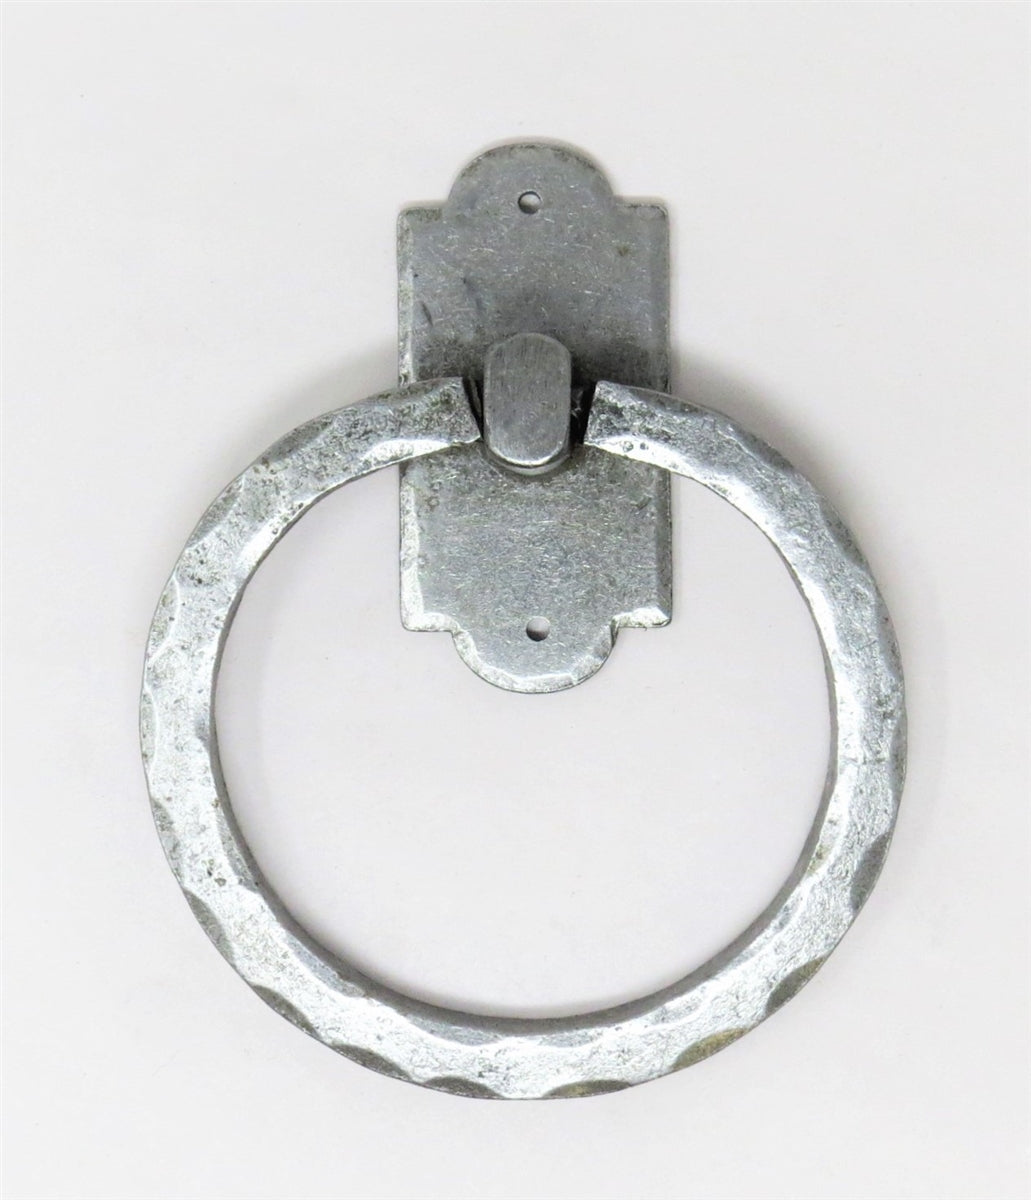 HRP-306 Colonial Iron Door Knocker / Ring Pull